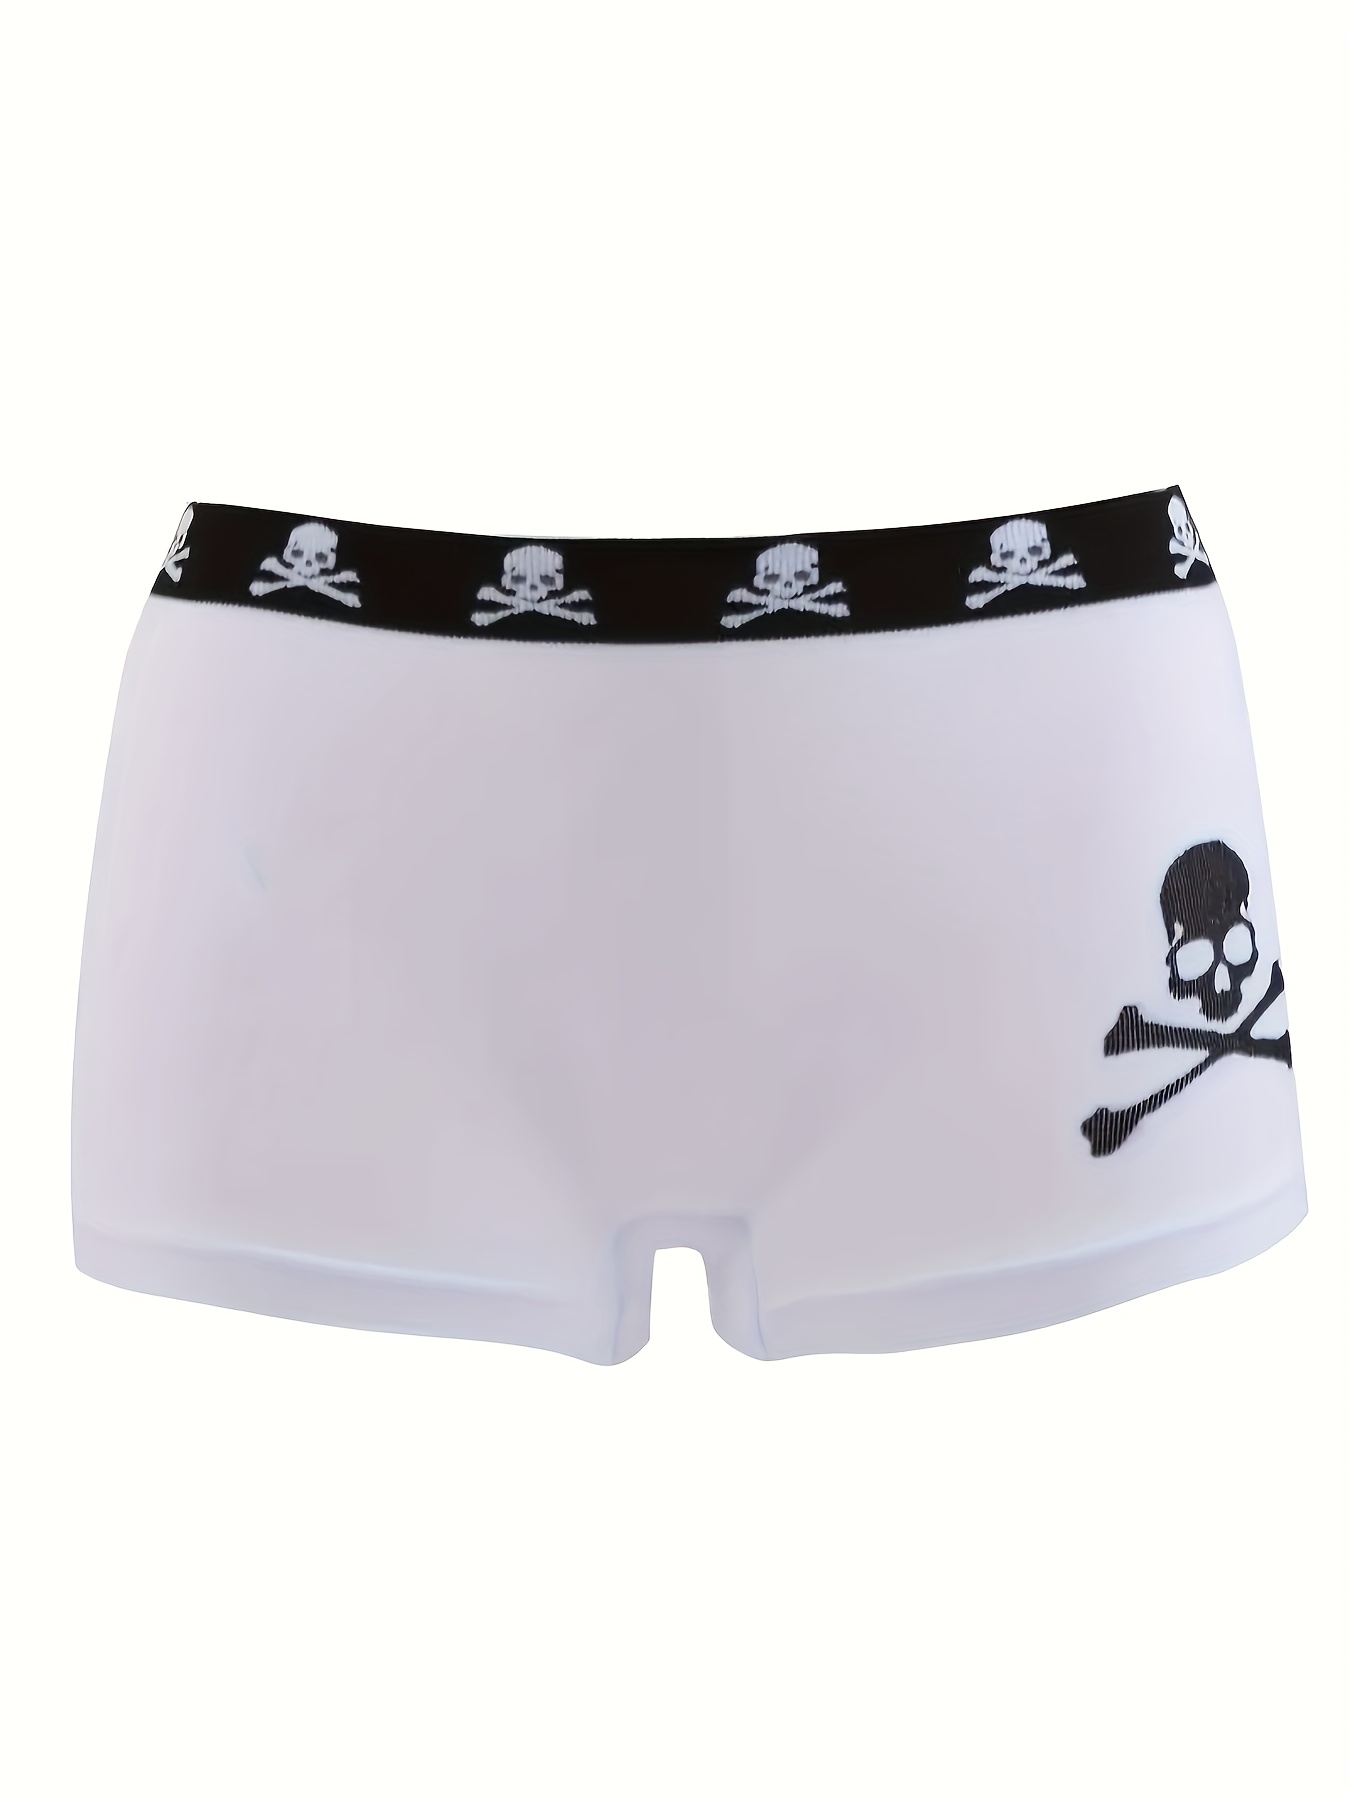 1 Pc Gothic Punk Boyshort Panty, Skull Print Contrast Trim Comfy Intimates  Boxer Shorts, Women's Lingerie & Underwear